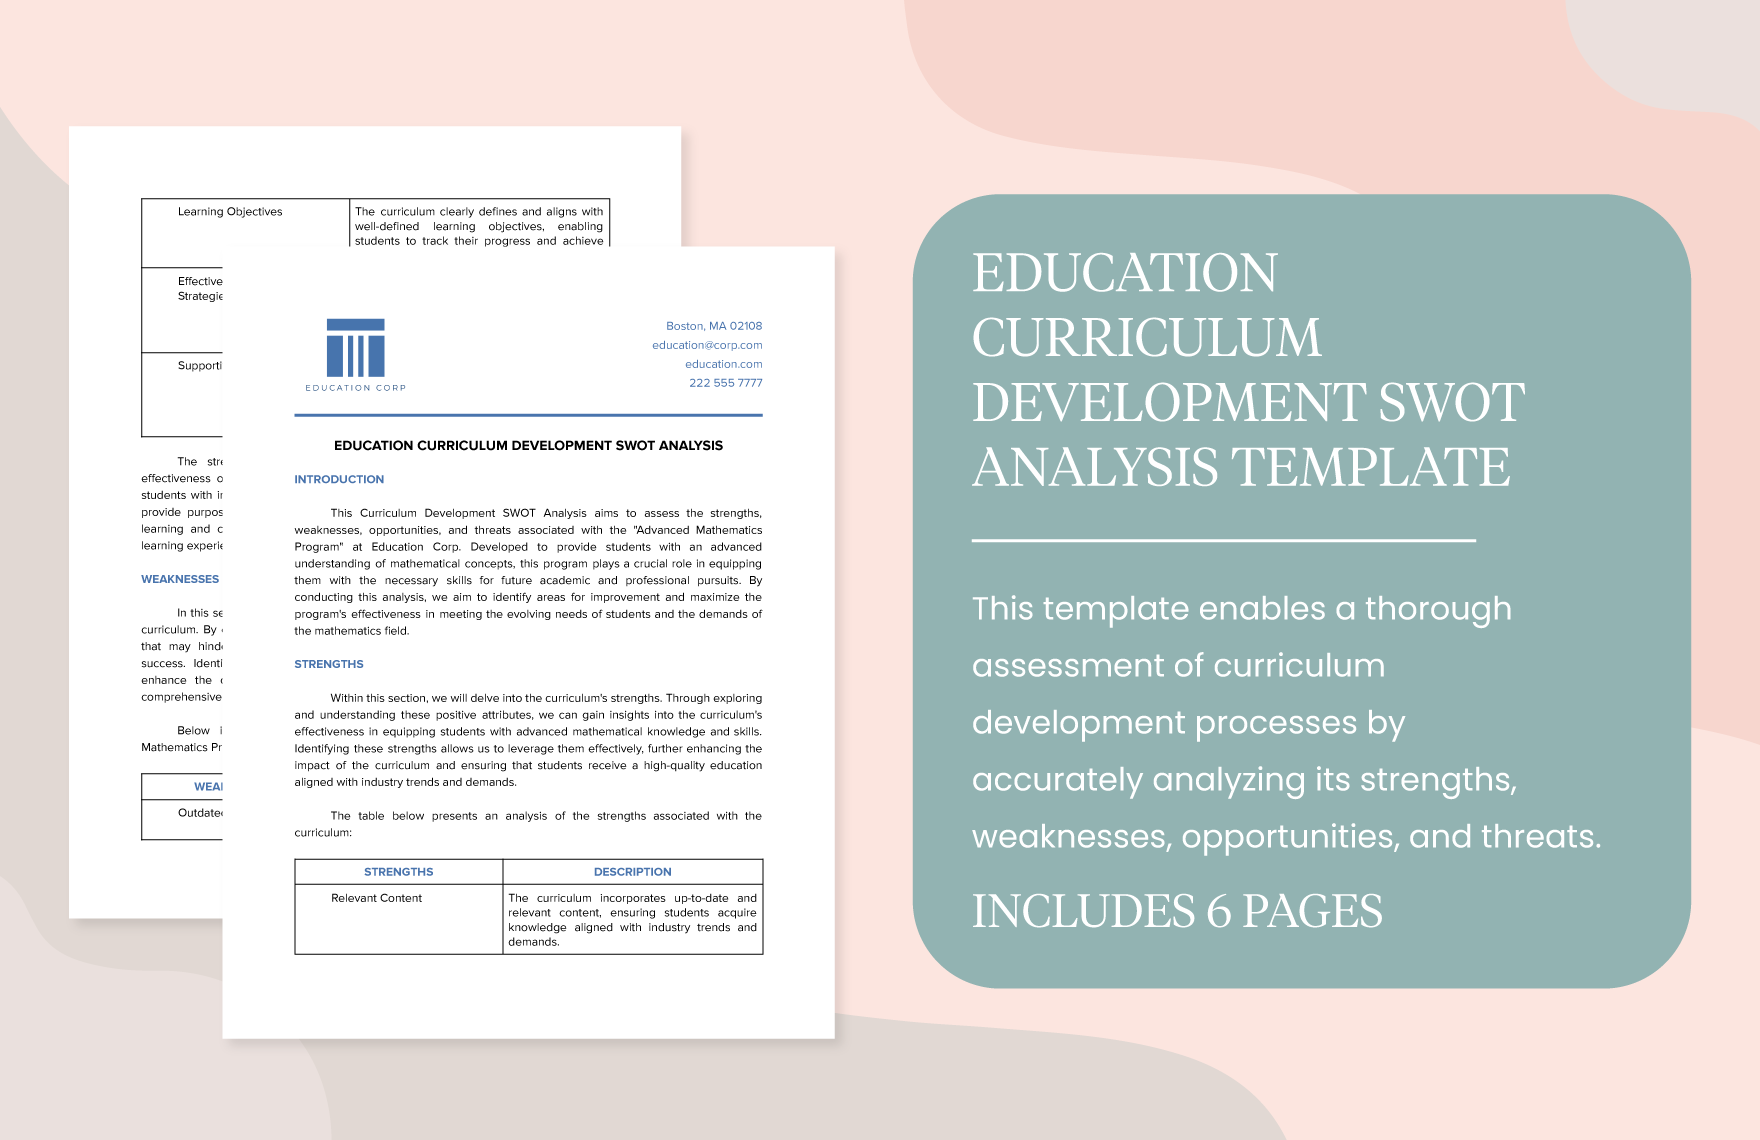 Education Curriculum Development SWOT Analysis Template